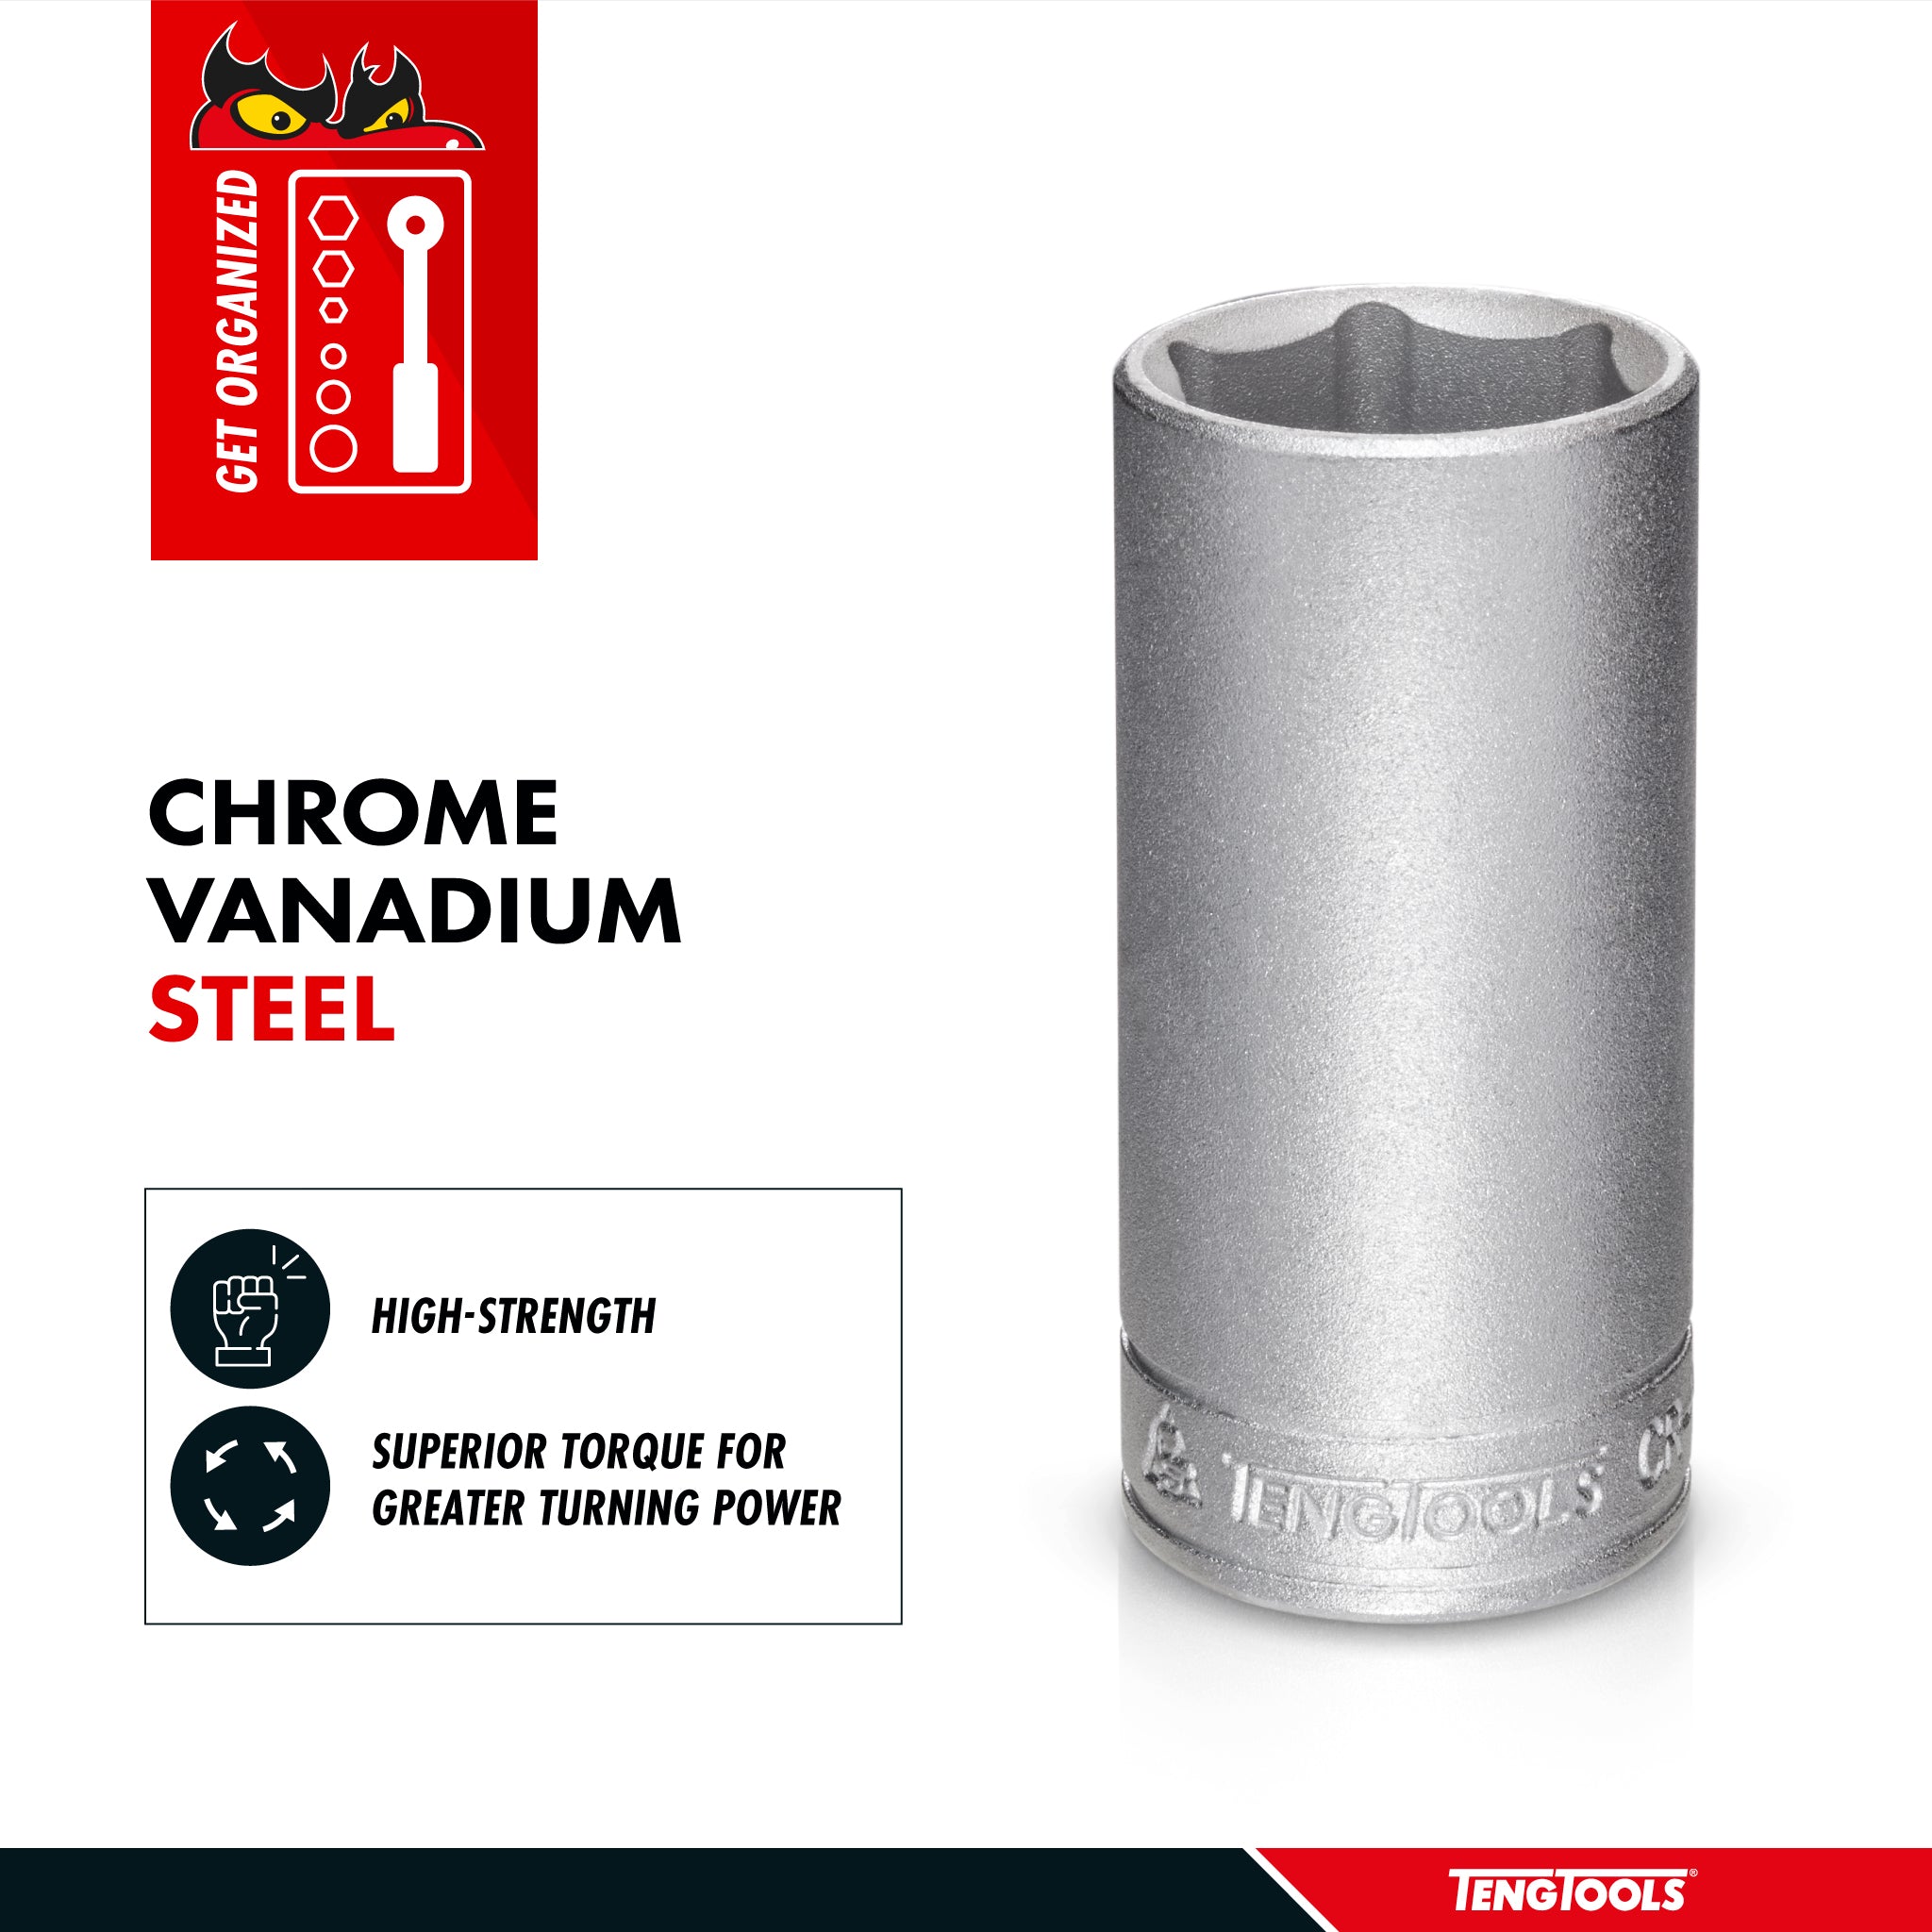 Teng Tools 3/8 Inch Drive 6 Point Metric Deep Chrome Vanadium Sockets - 15mm